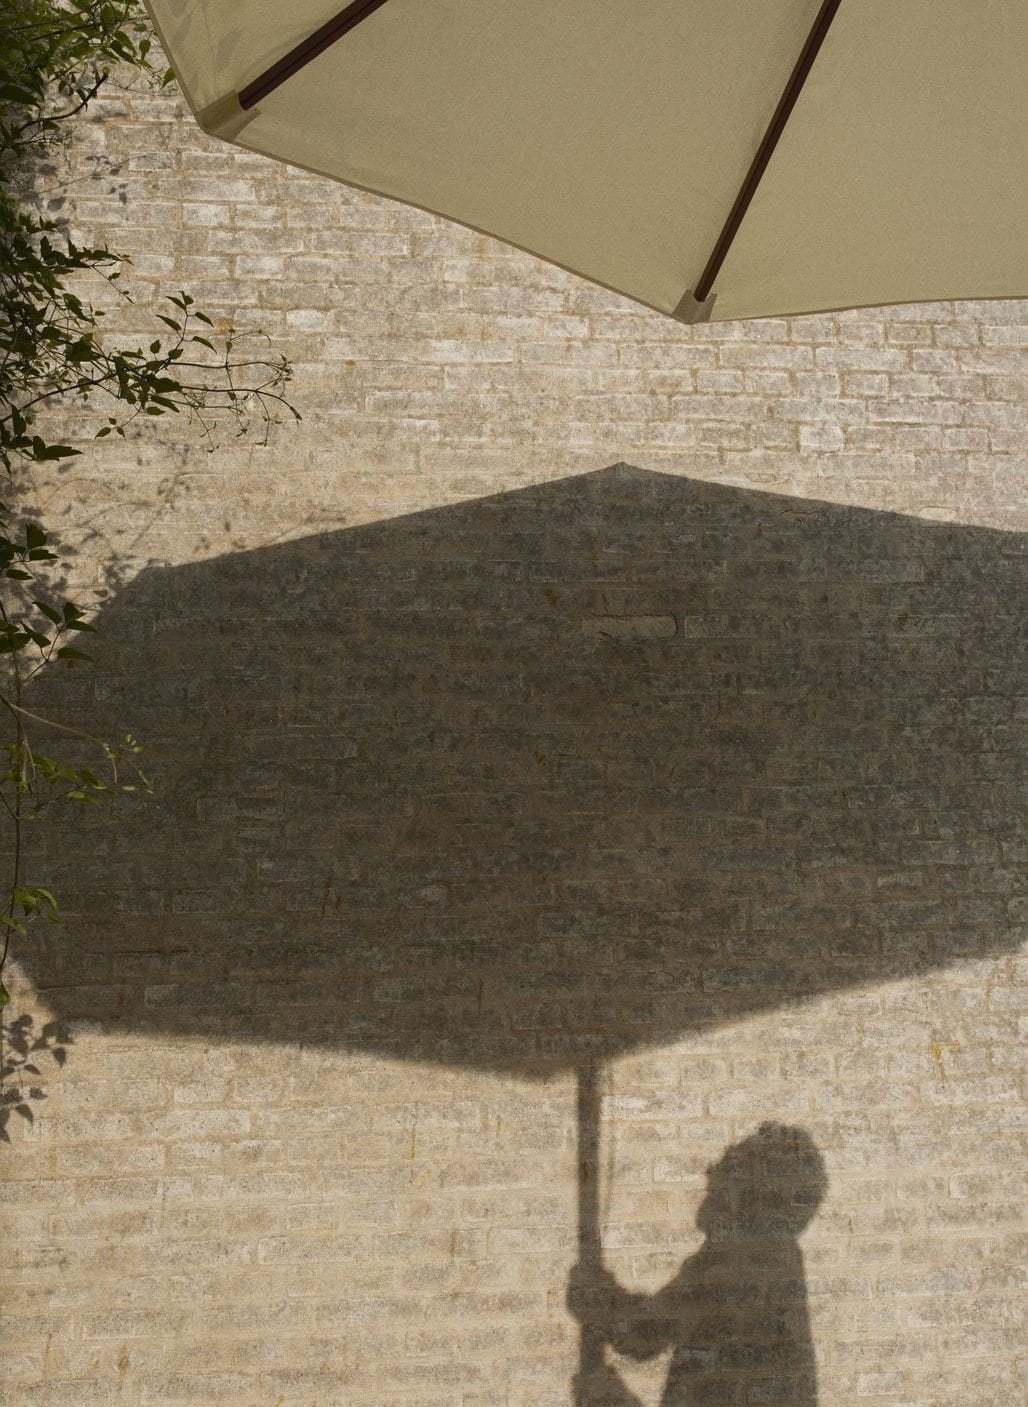 Skagerak Messina parasol Ø300 cm, uit wit